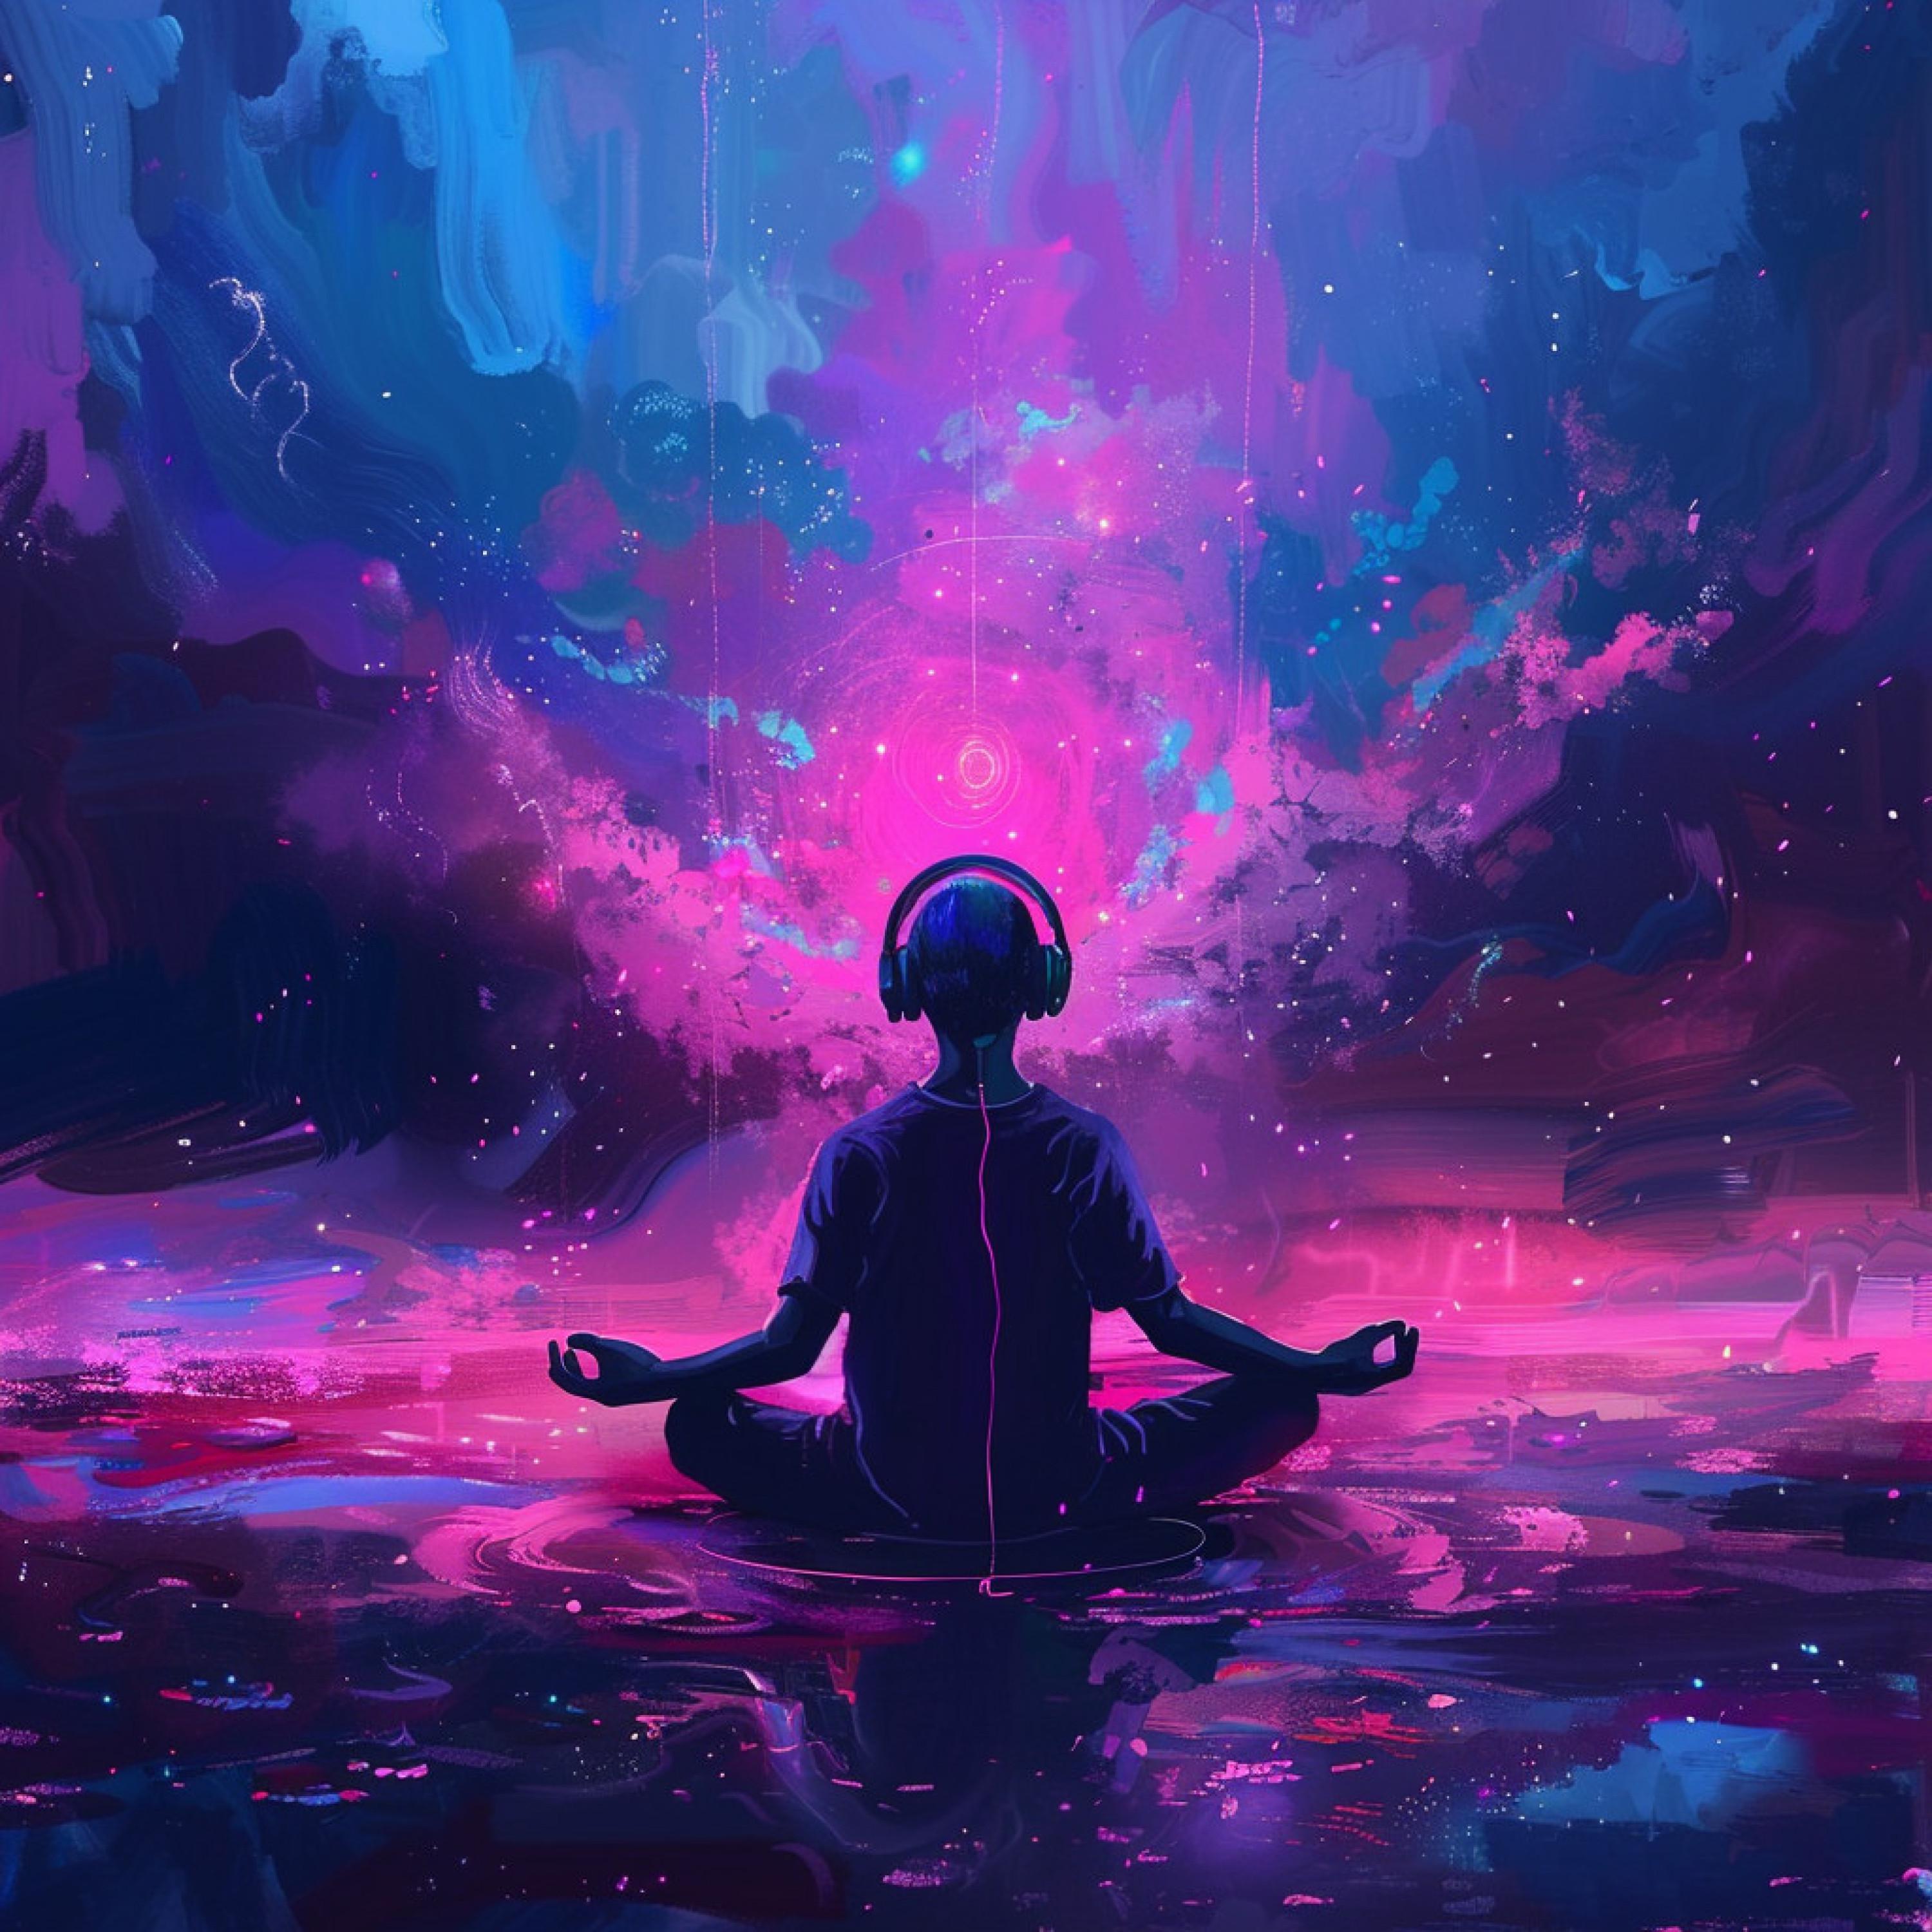 Meditation Day - Echoes Stir the Mind